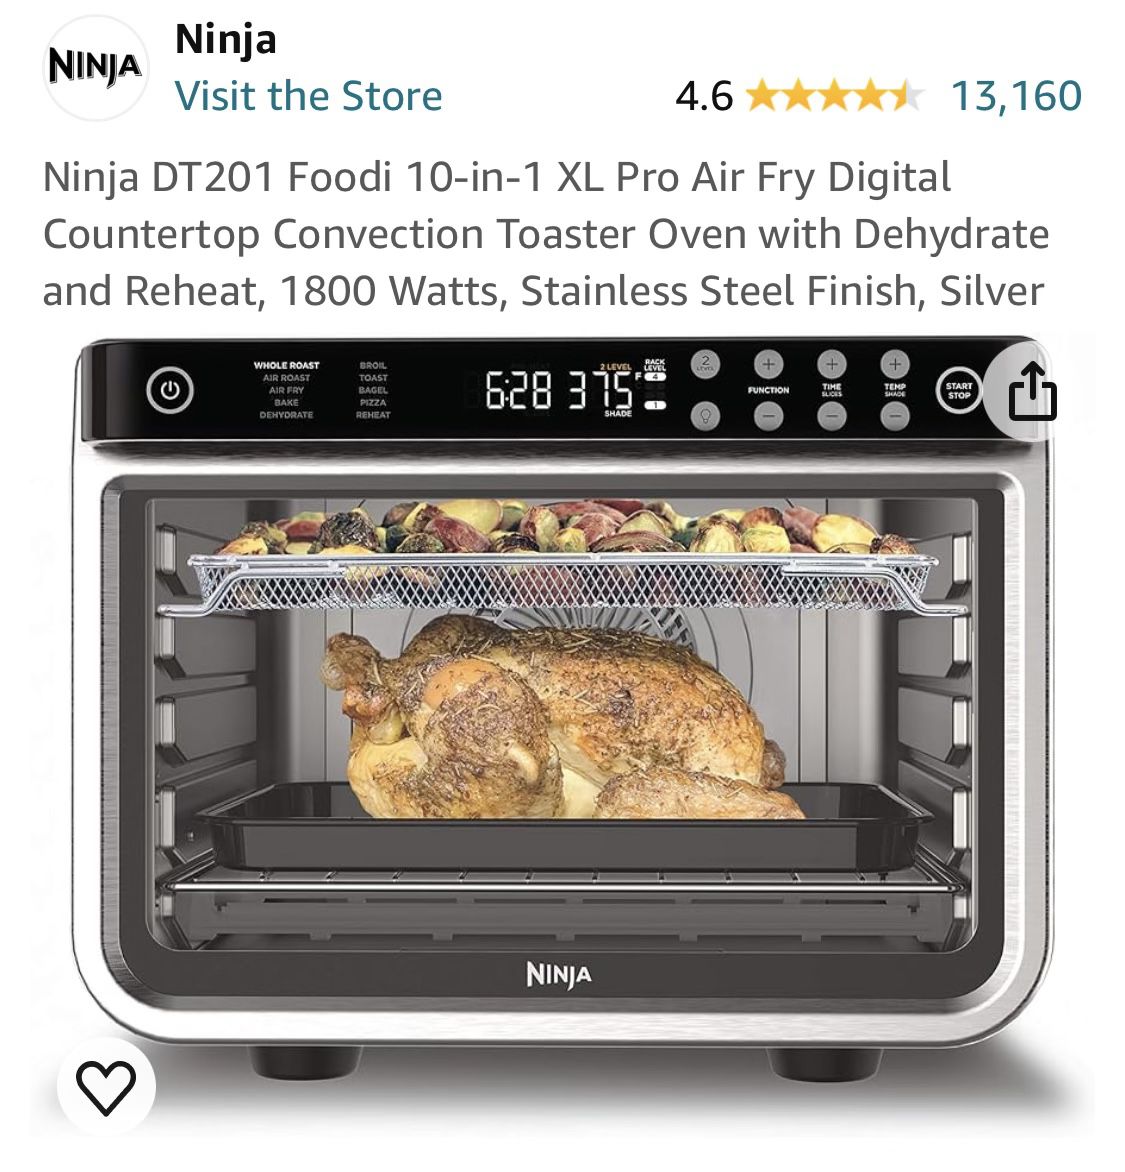 Ninja DT201 Foodi 10-in-1 XL Pro Air Fryer.